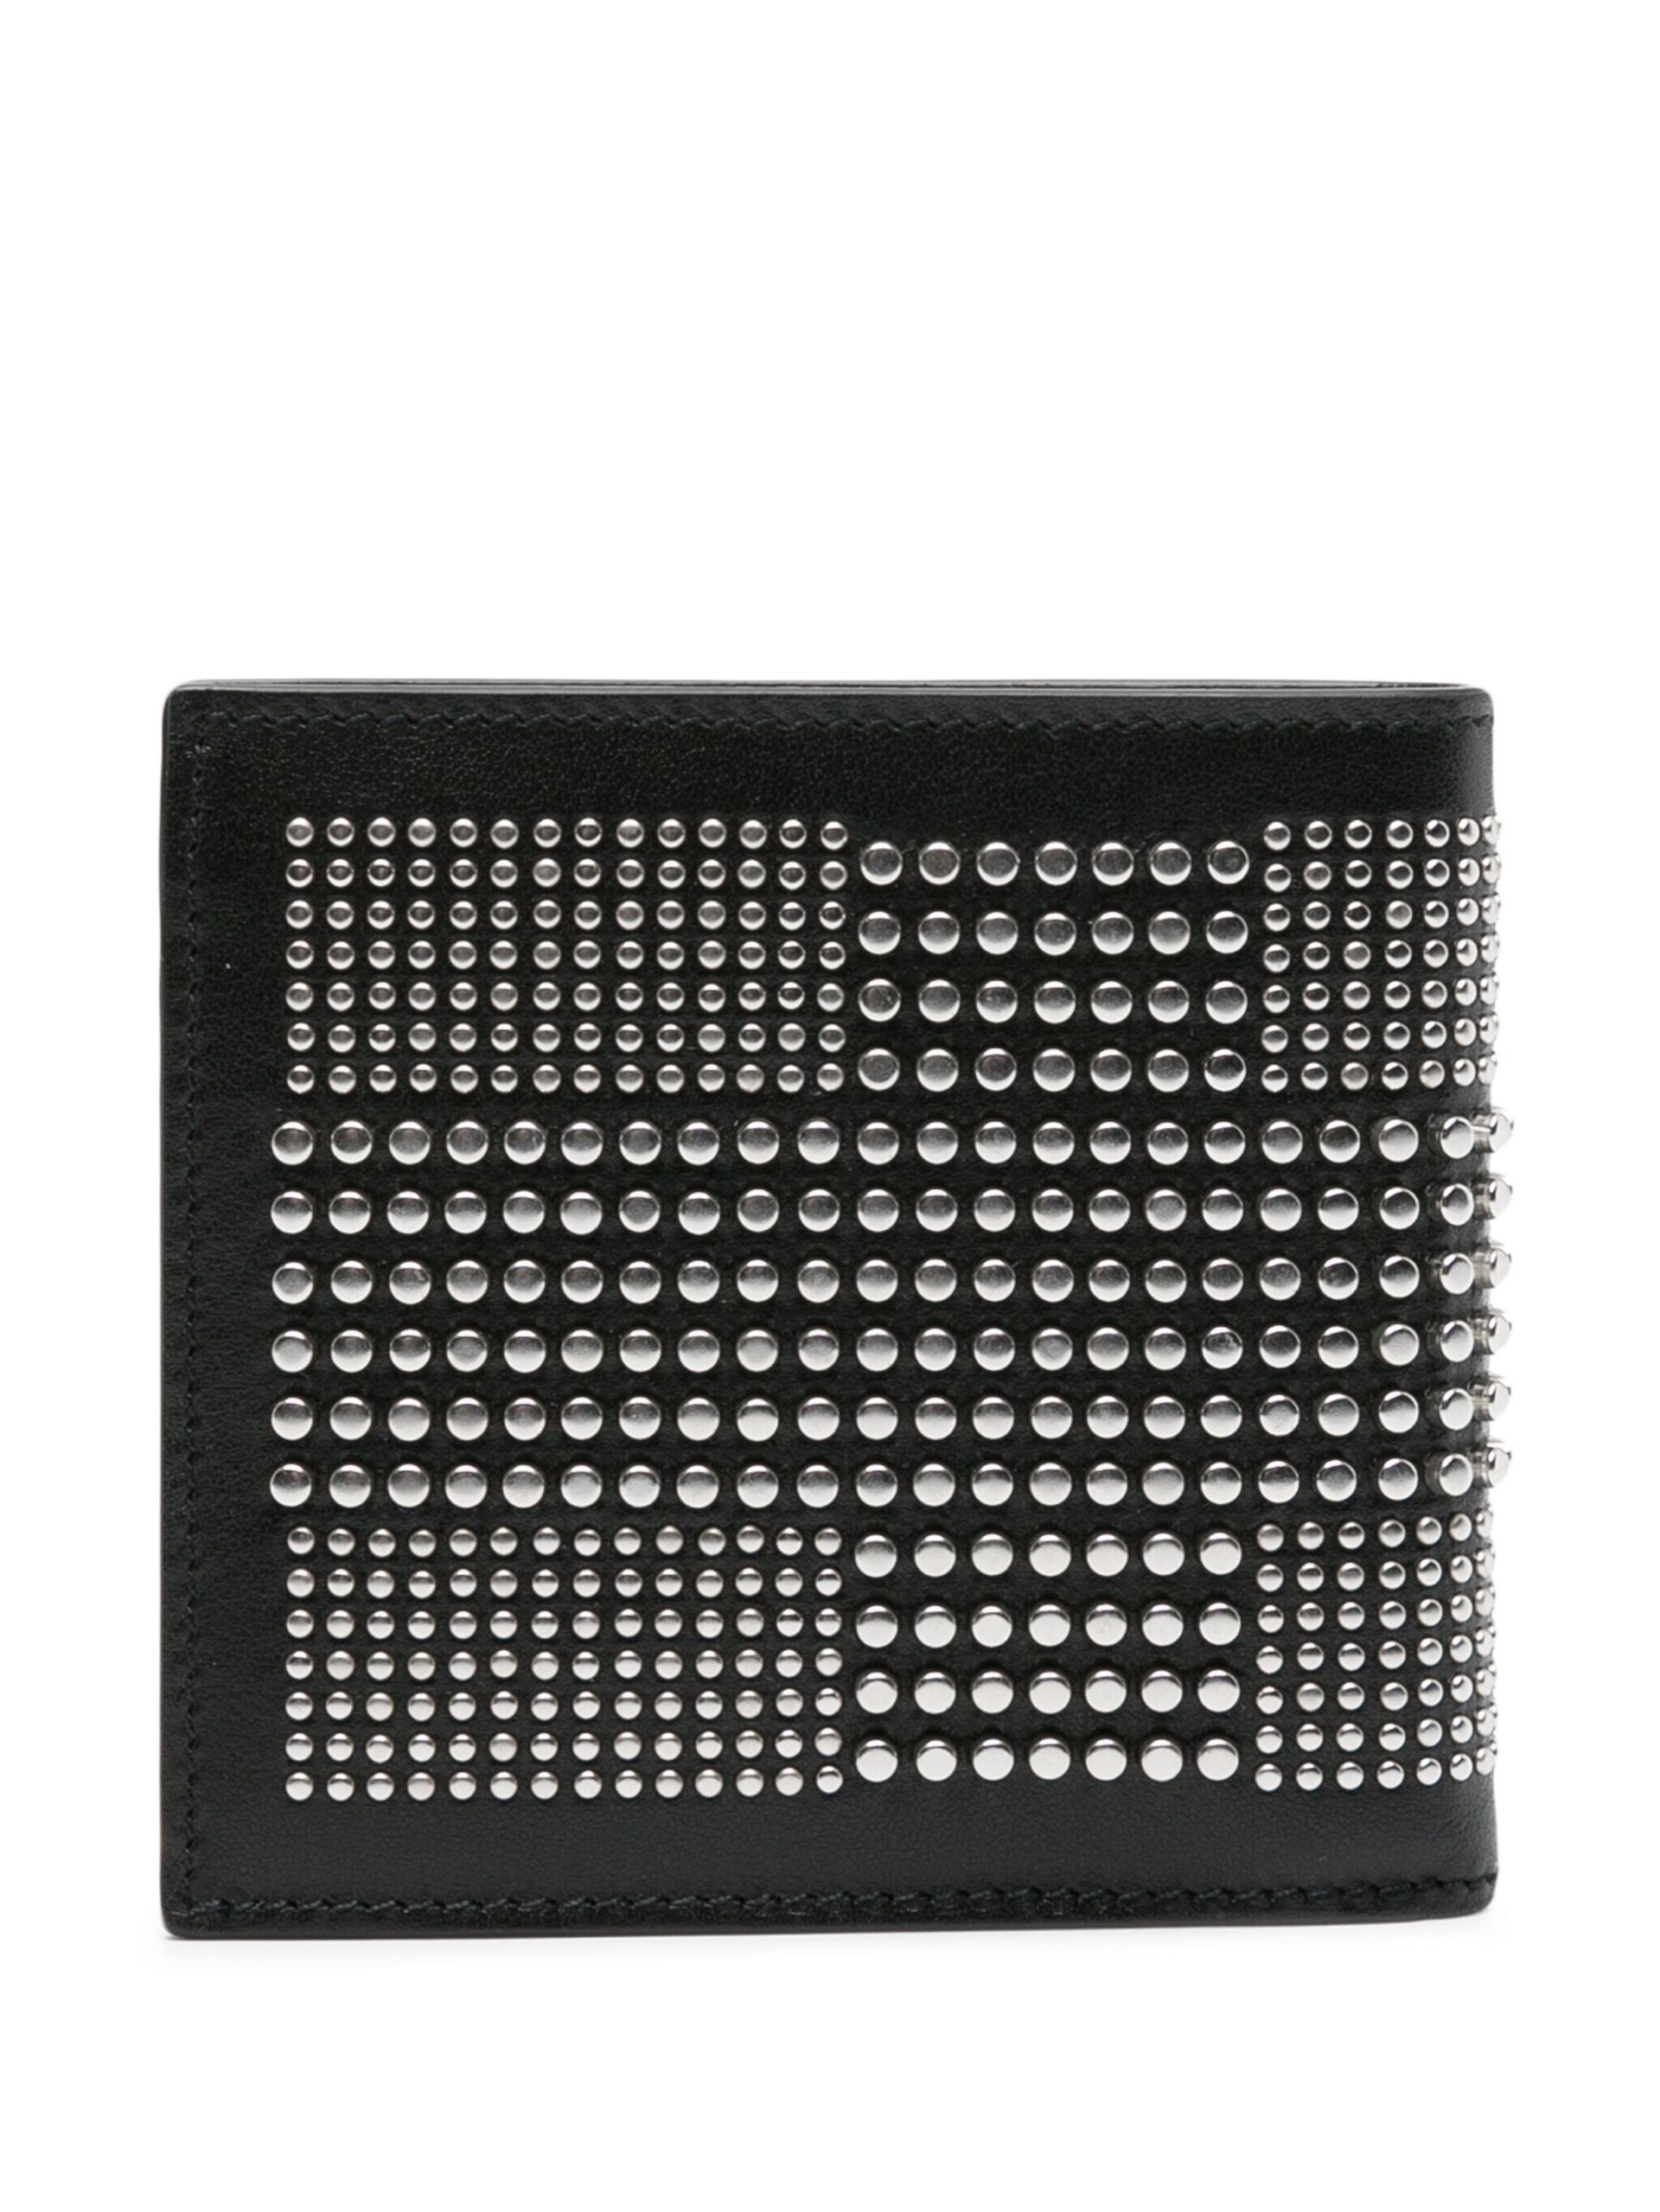 black studded bi-fold leather wallet - 2